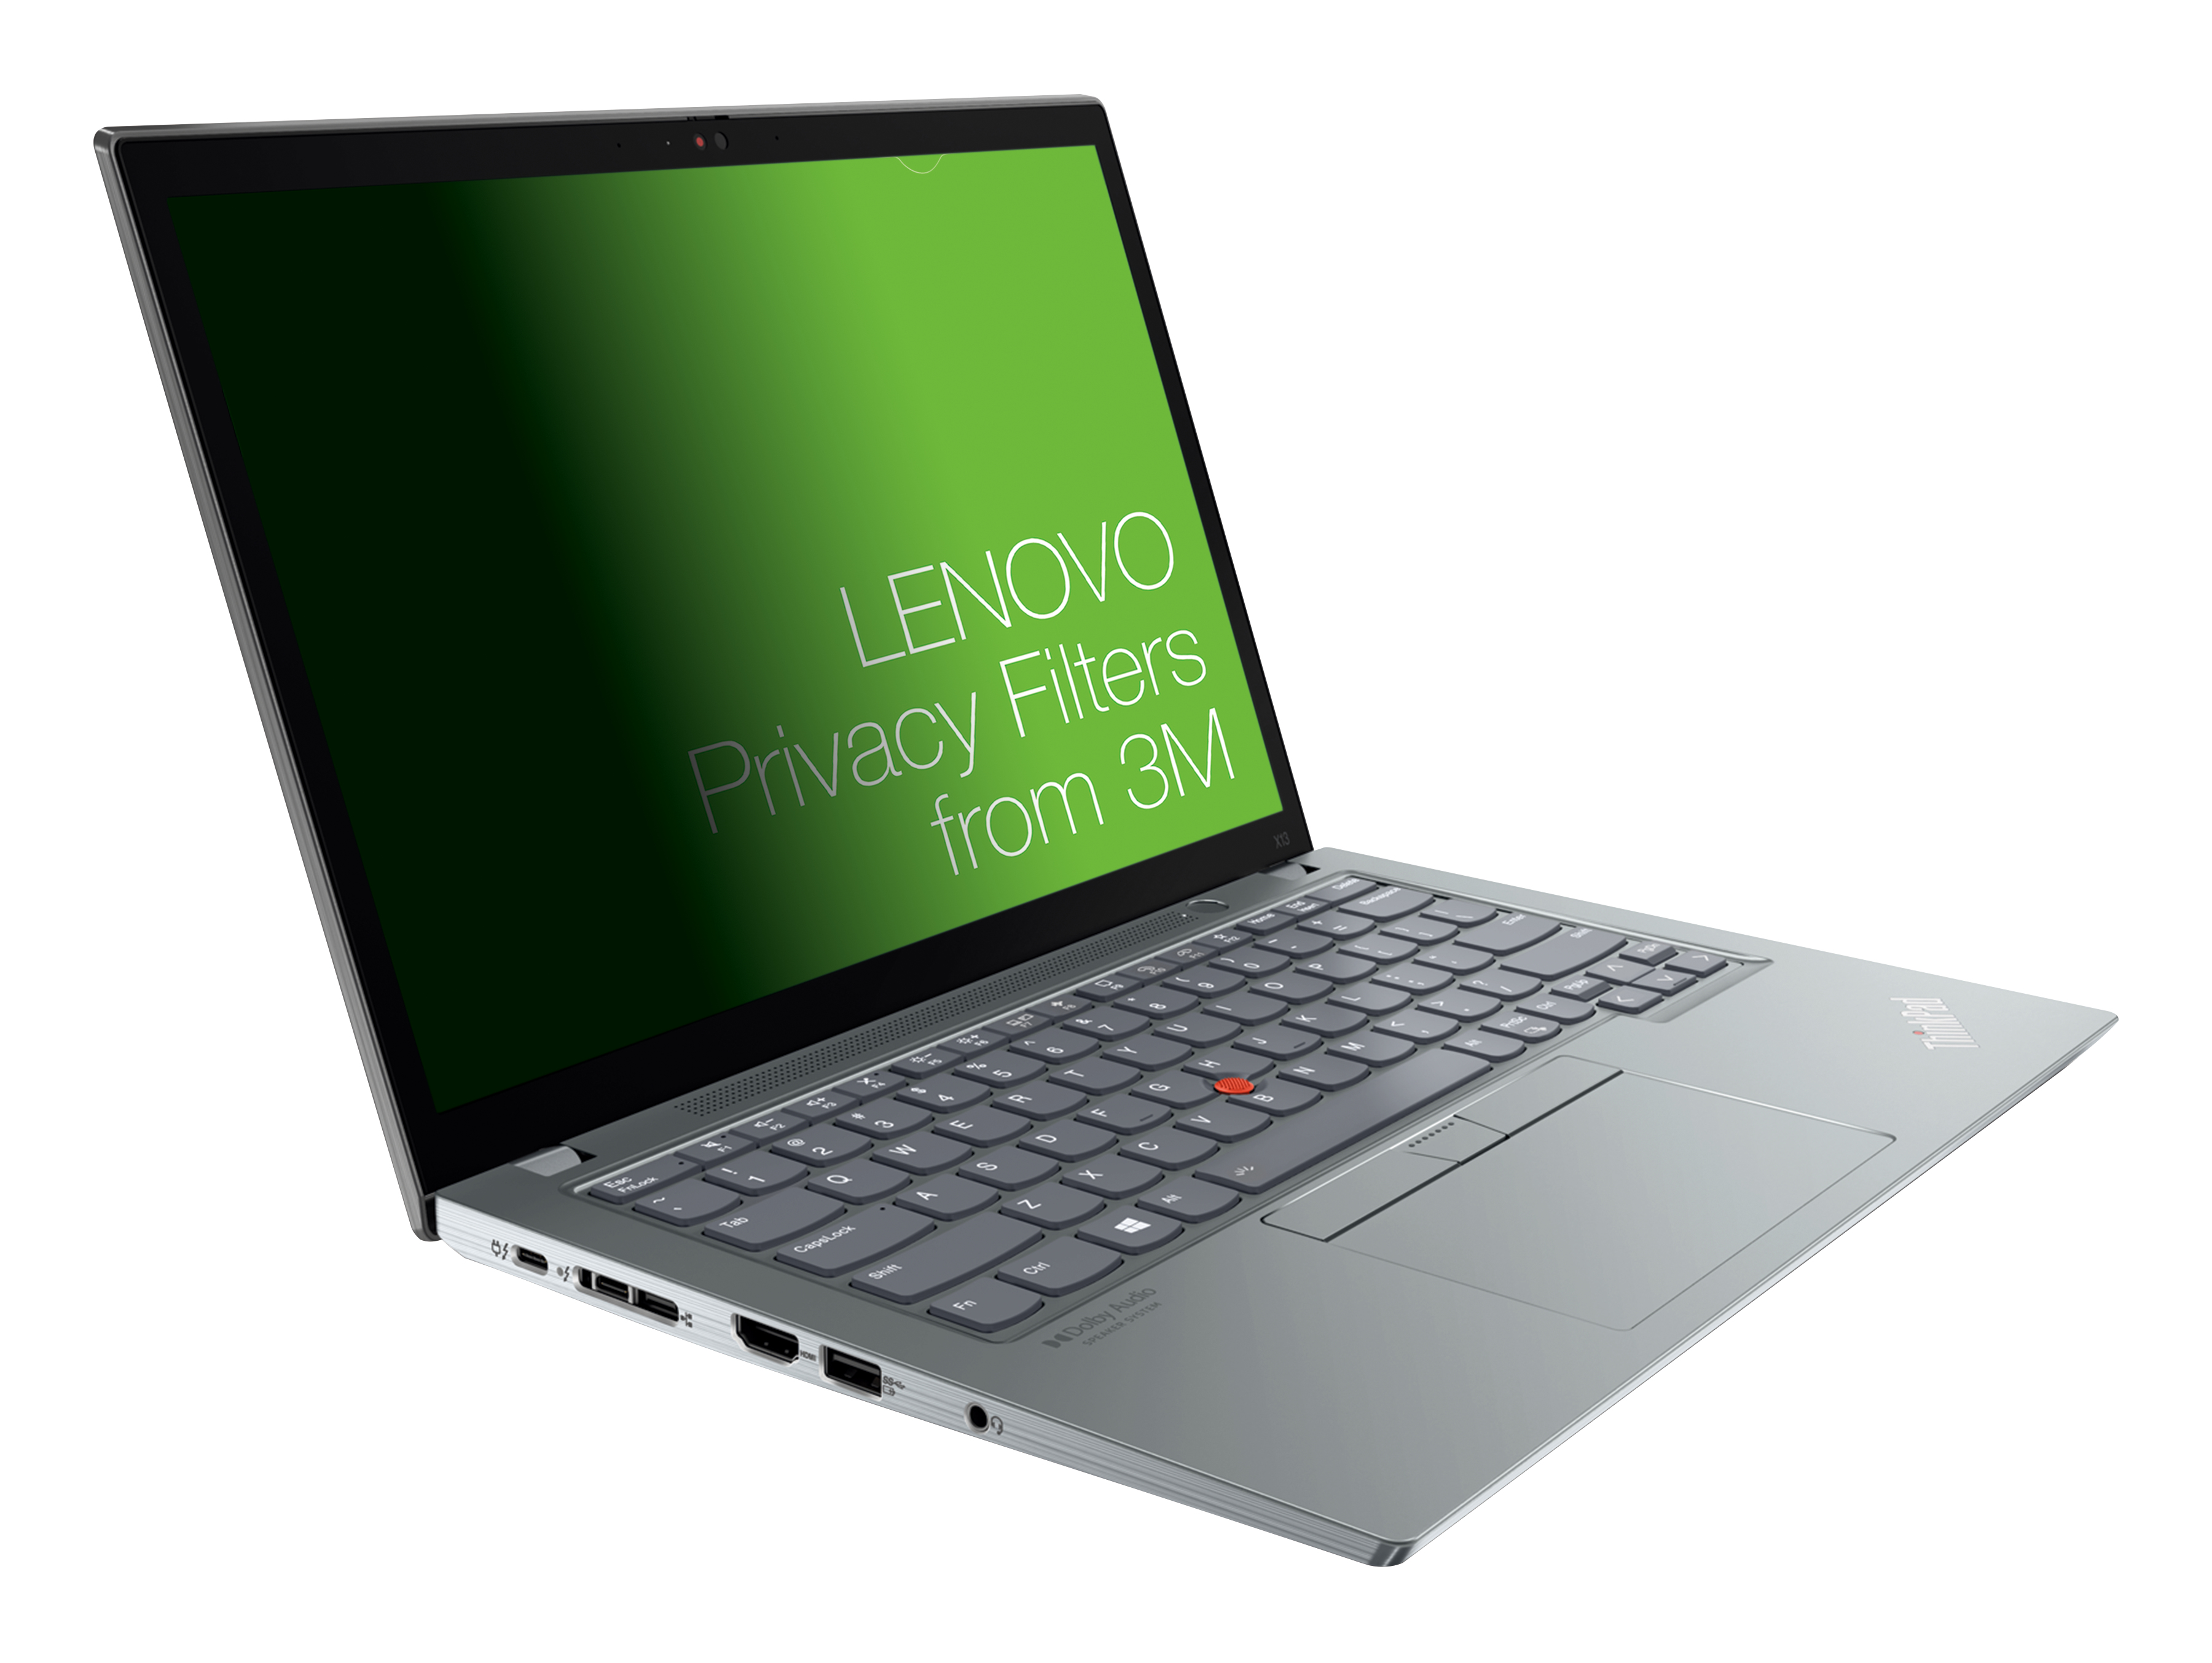 Lenovo 3M - Blickschutzfilter für Notebook - entfernbar - 33,8 cm Breitbild (13,3 Zoll Breitbild)